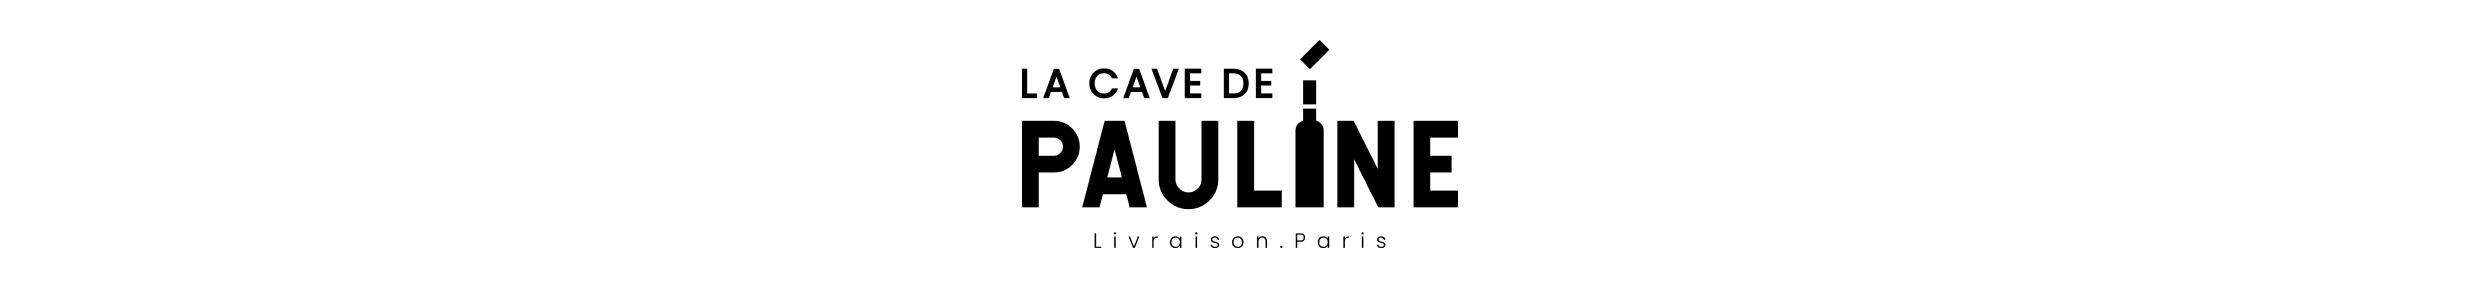 LA CAVE DE PAULINE logo